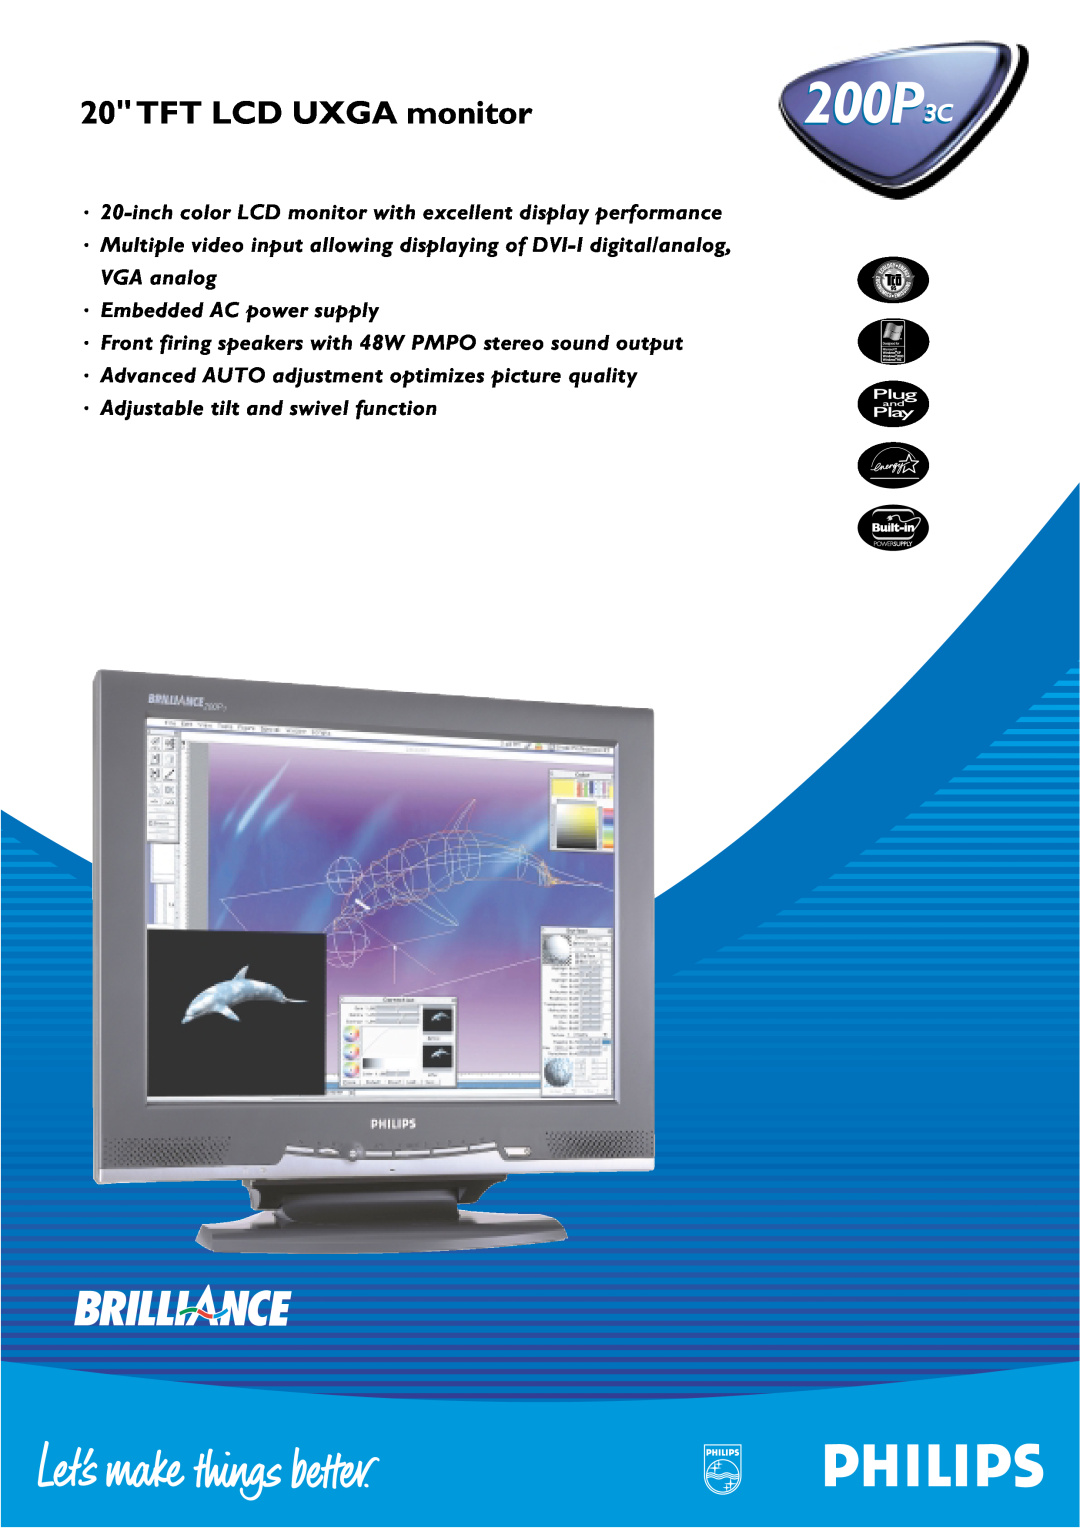 Philips 200P3C manual TFT LCD UXGA monitor, Embedded AC power supply, Adjustable tilt and swivel function 